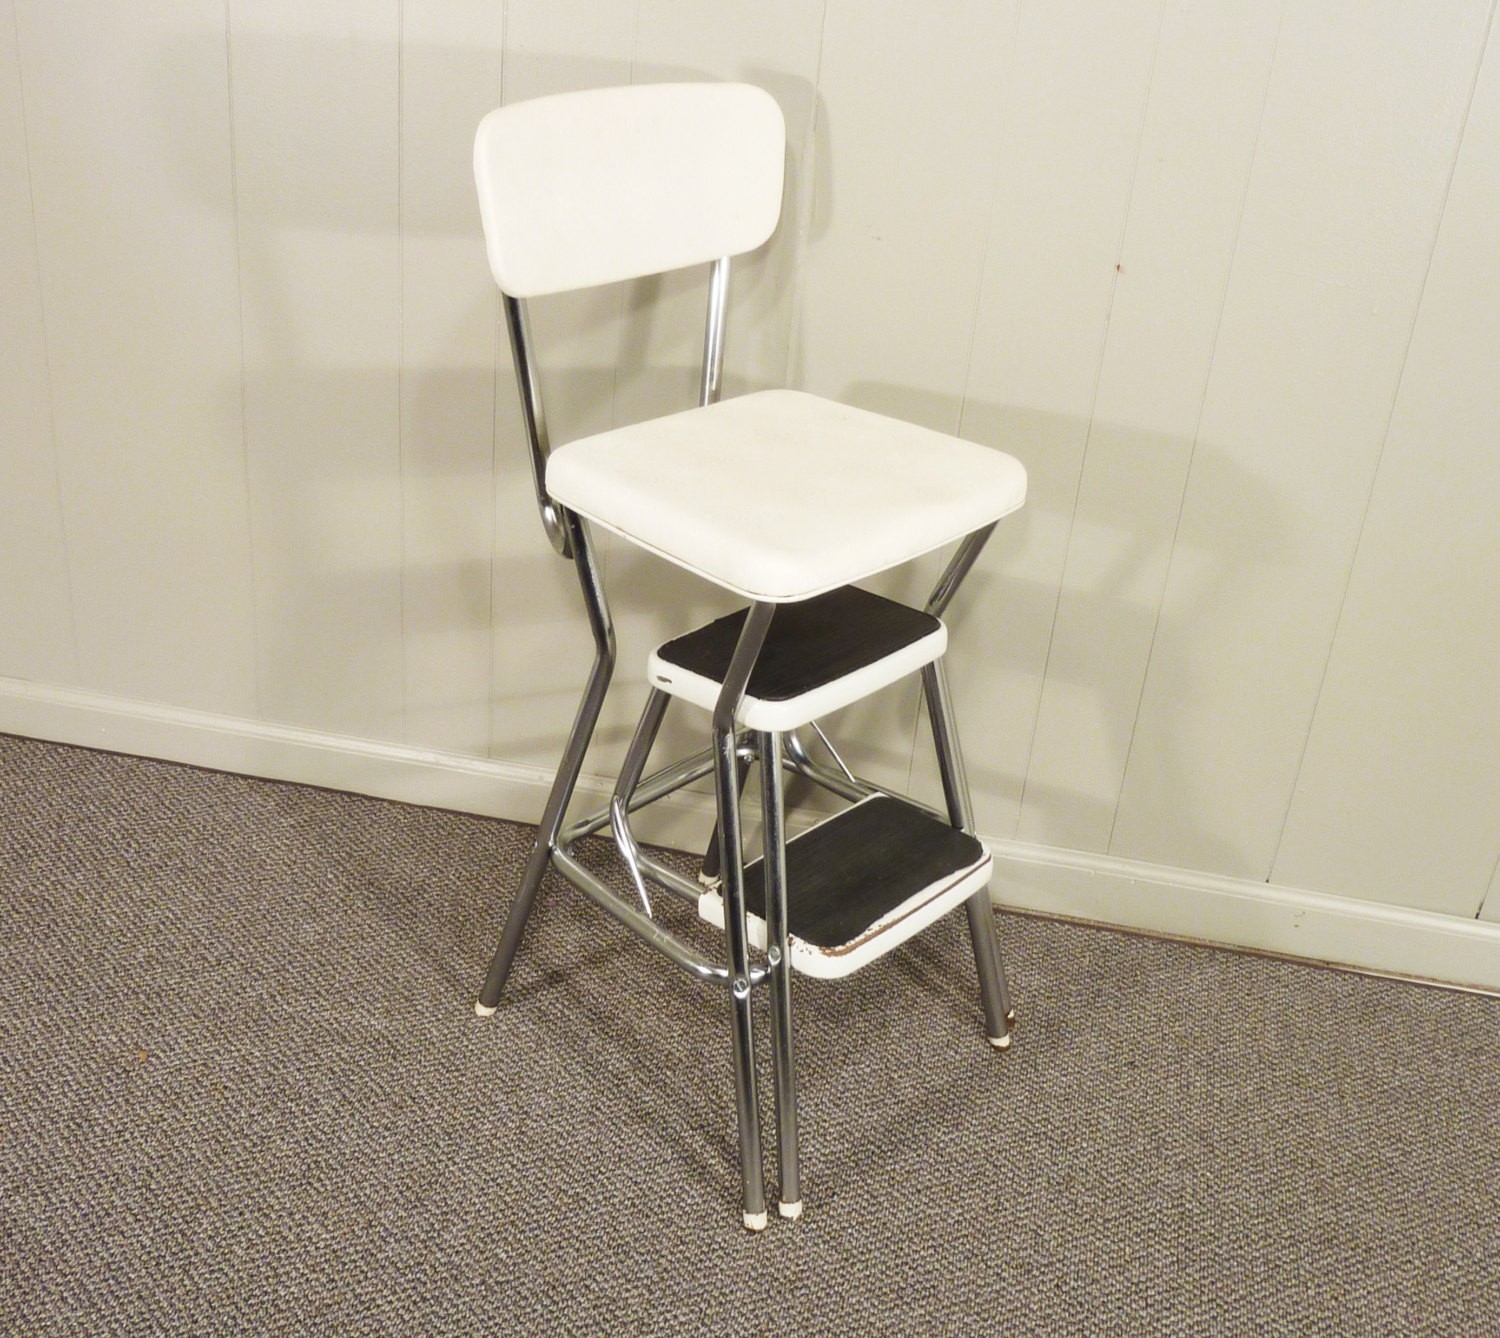 Retro cosco 50s vintage step stool kitchen stool chair 2